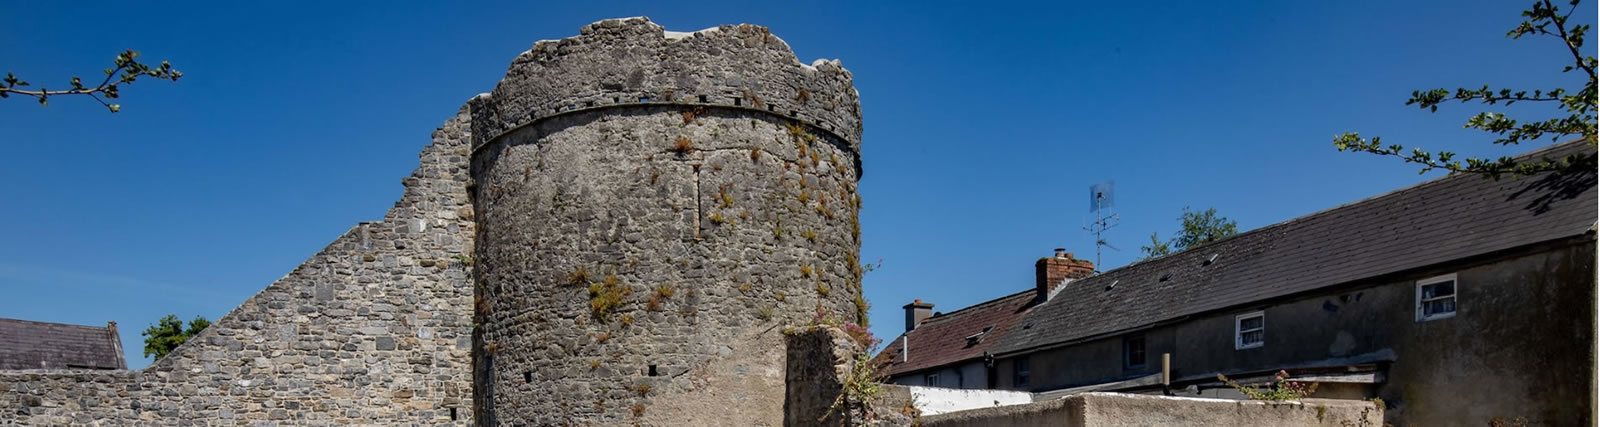 Talbots Tower Kilkenny City Walls